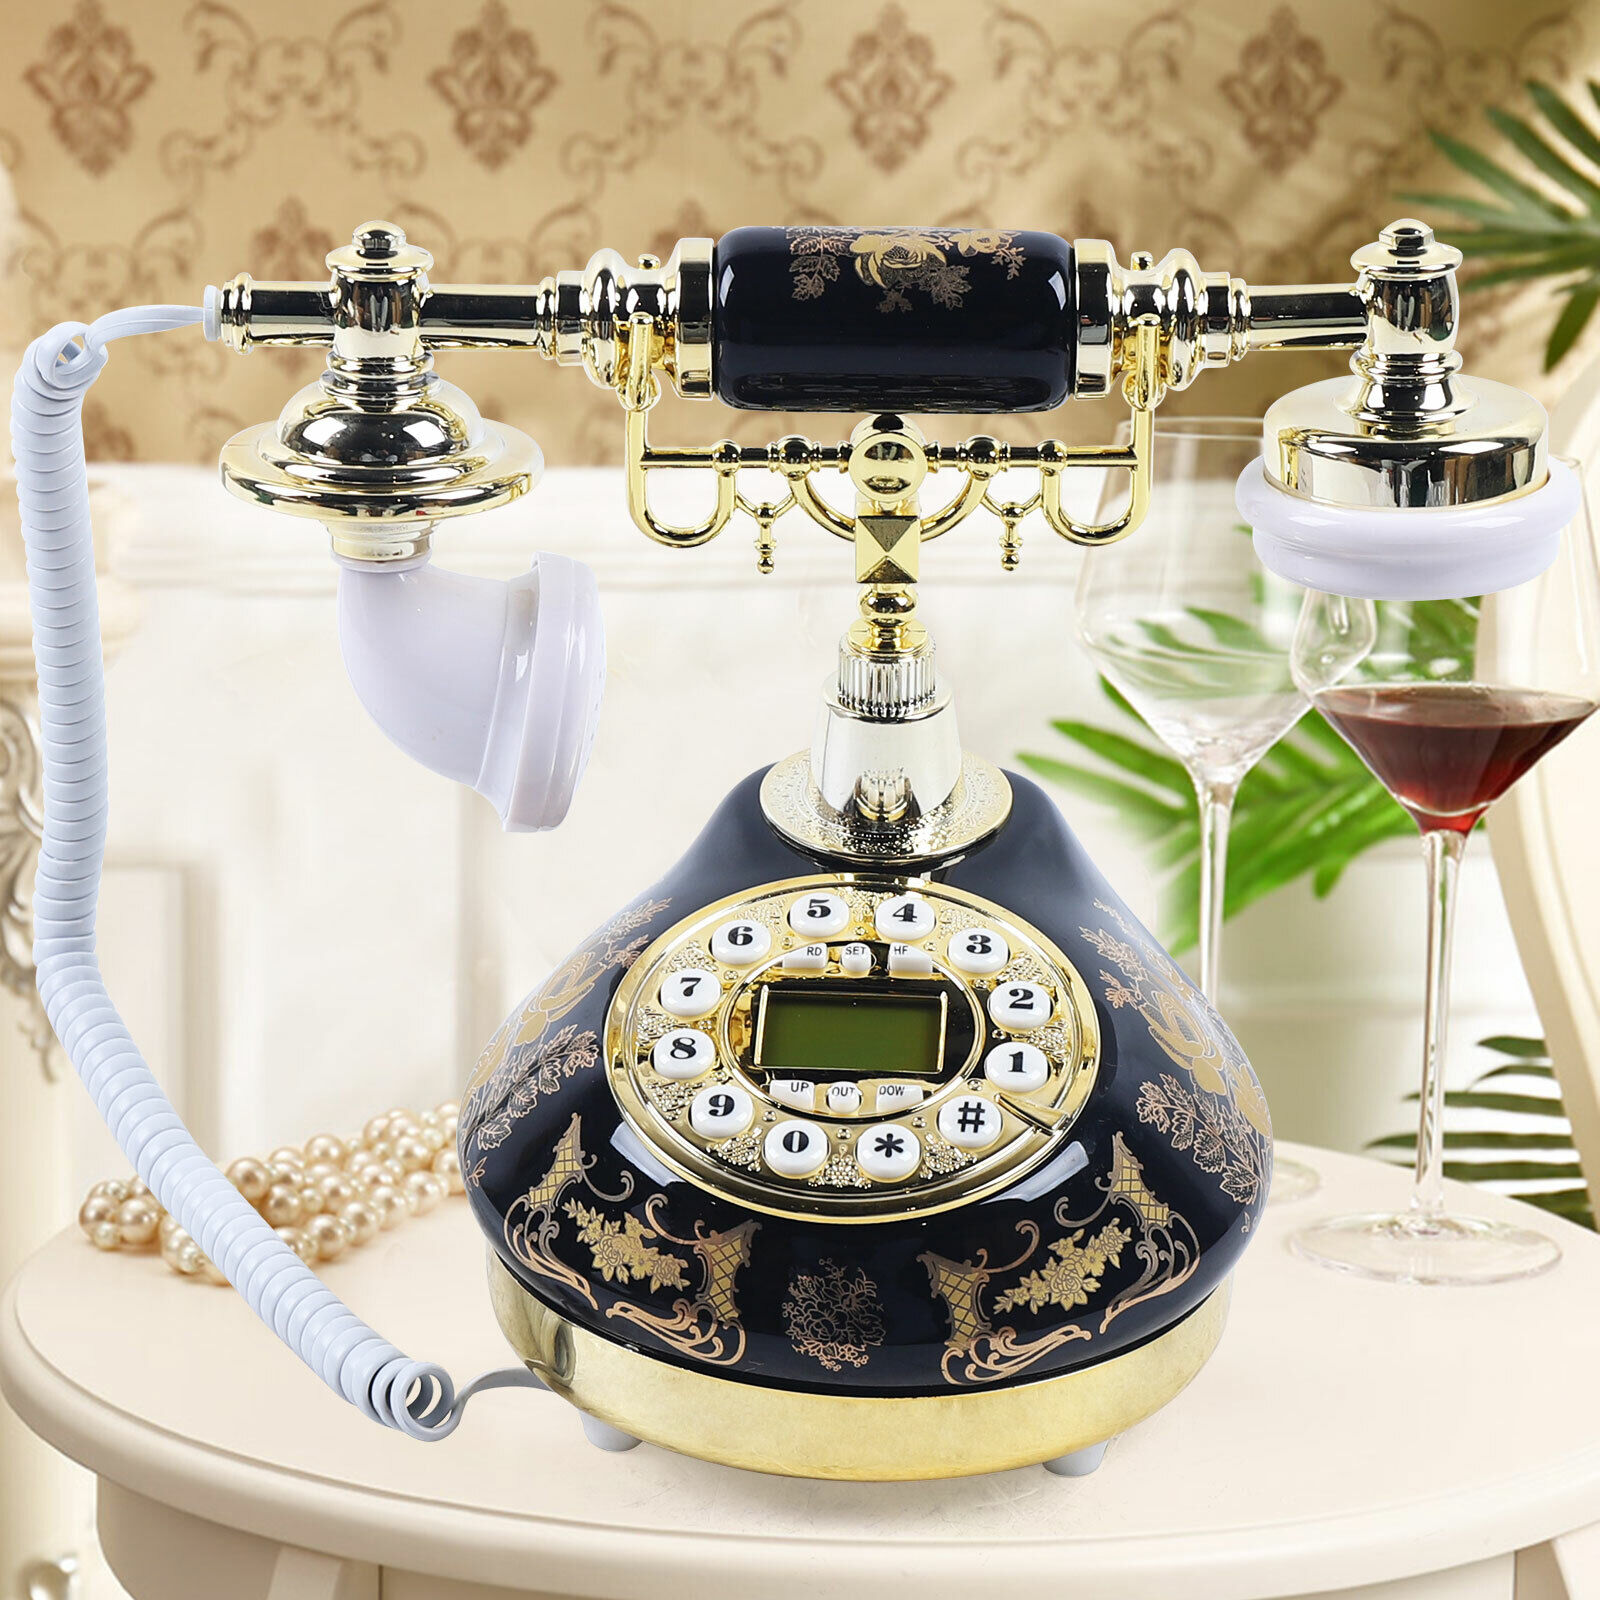 Antique Landline Telephone Vintage Phone Corded Old Fashion Home Office Decor US